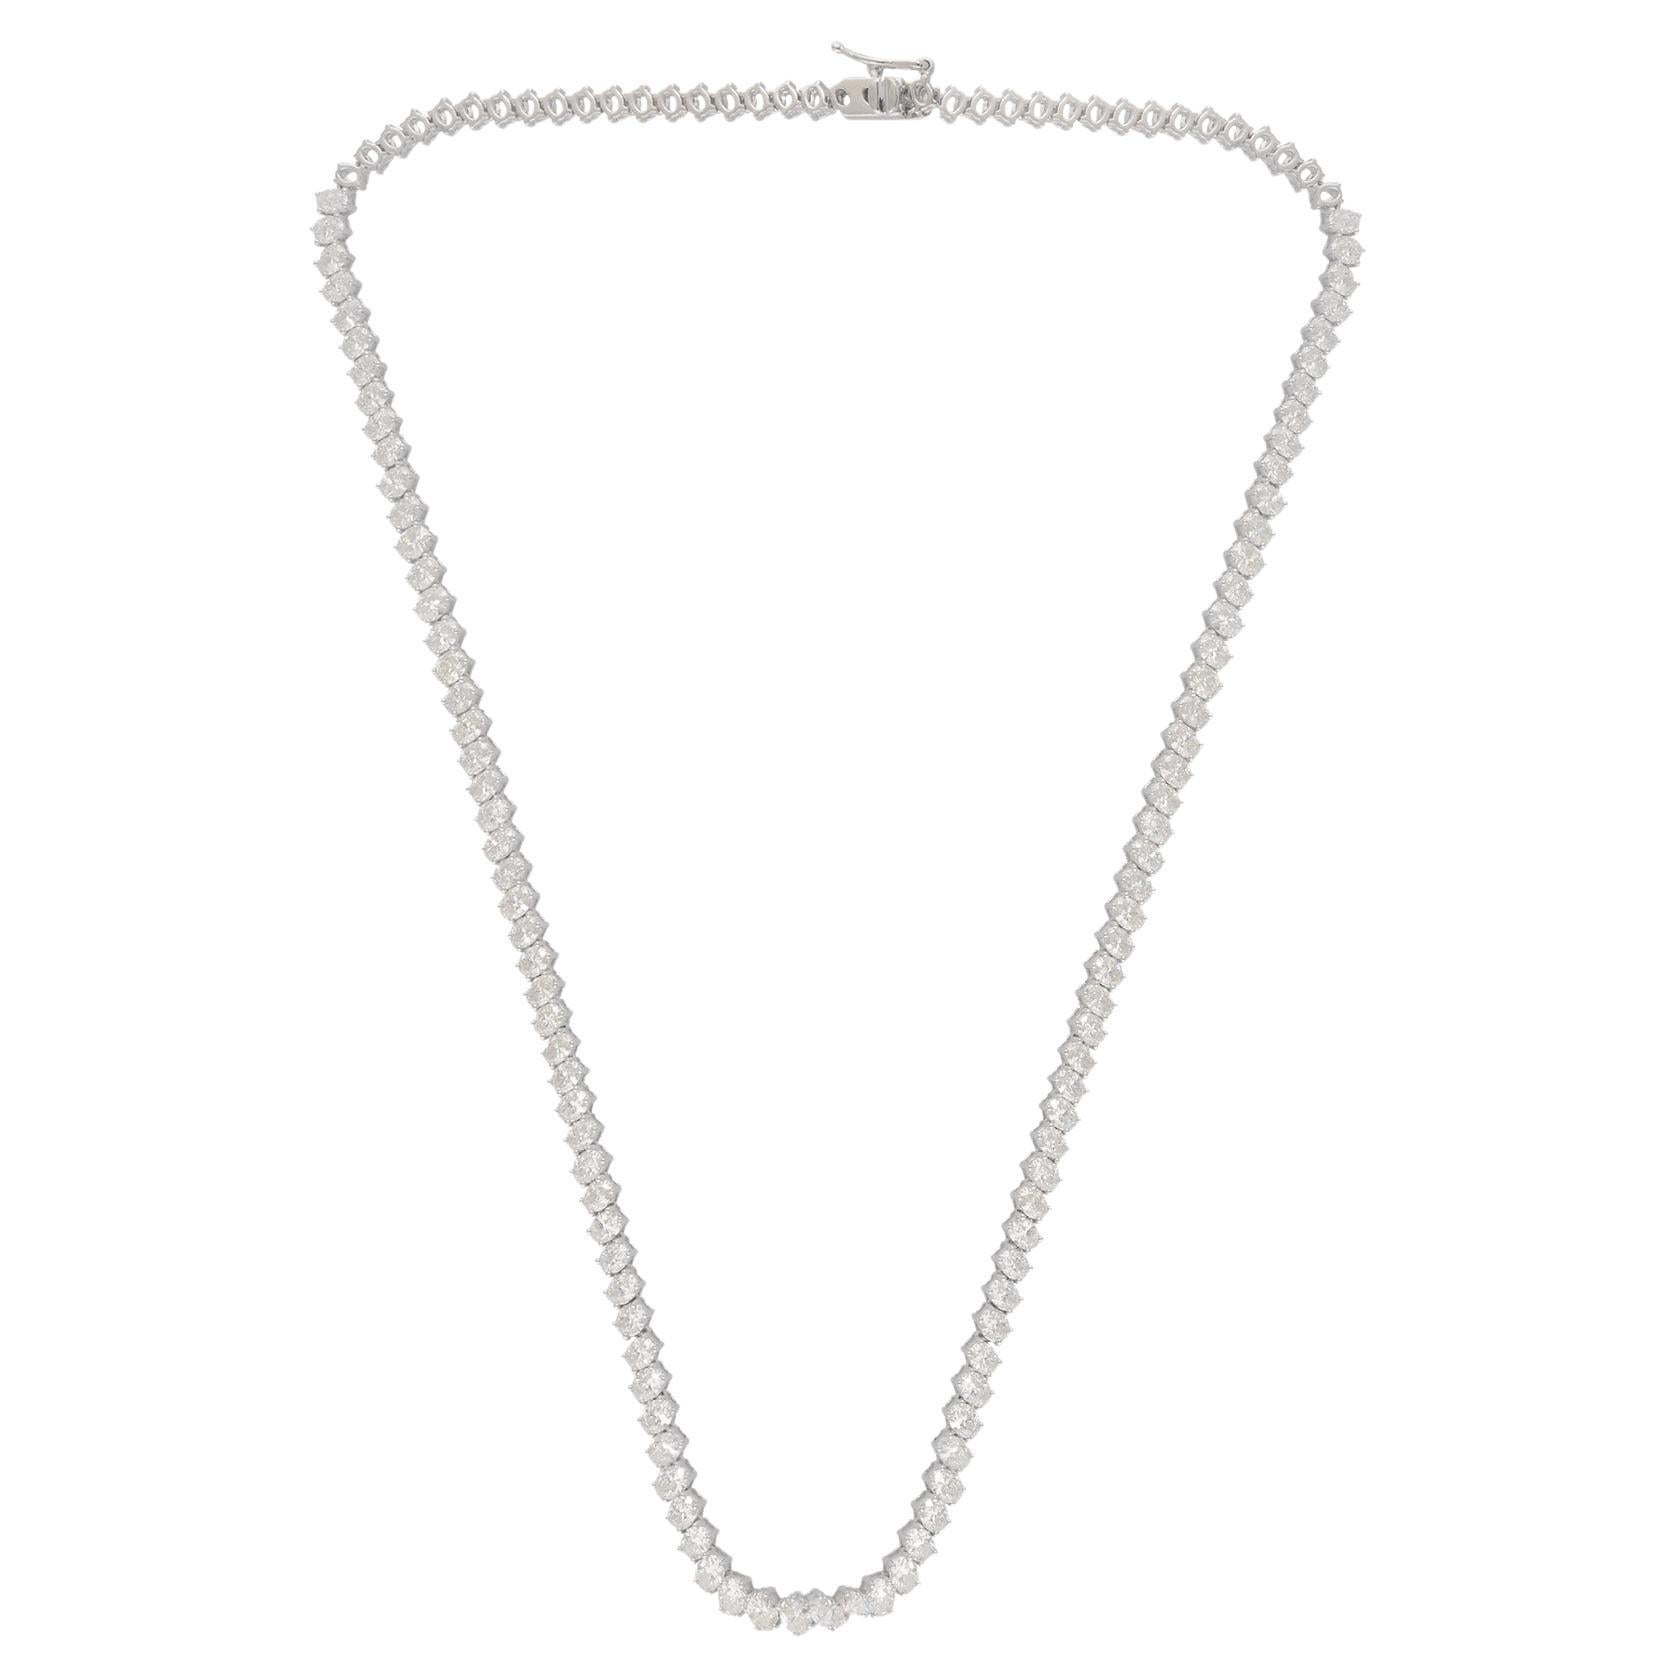 9.50 Carat Oval Shape Diamond Necklace 18 Karat White Gold Handmade Fine Jewelry For Sale